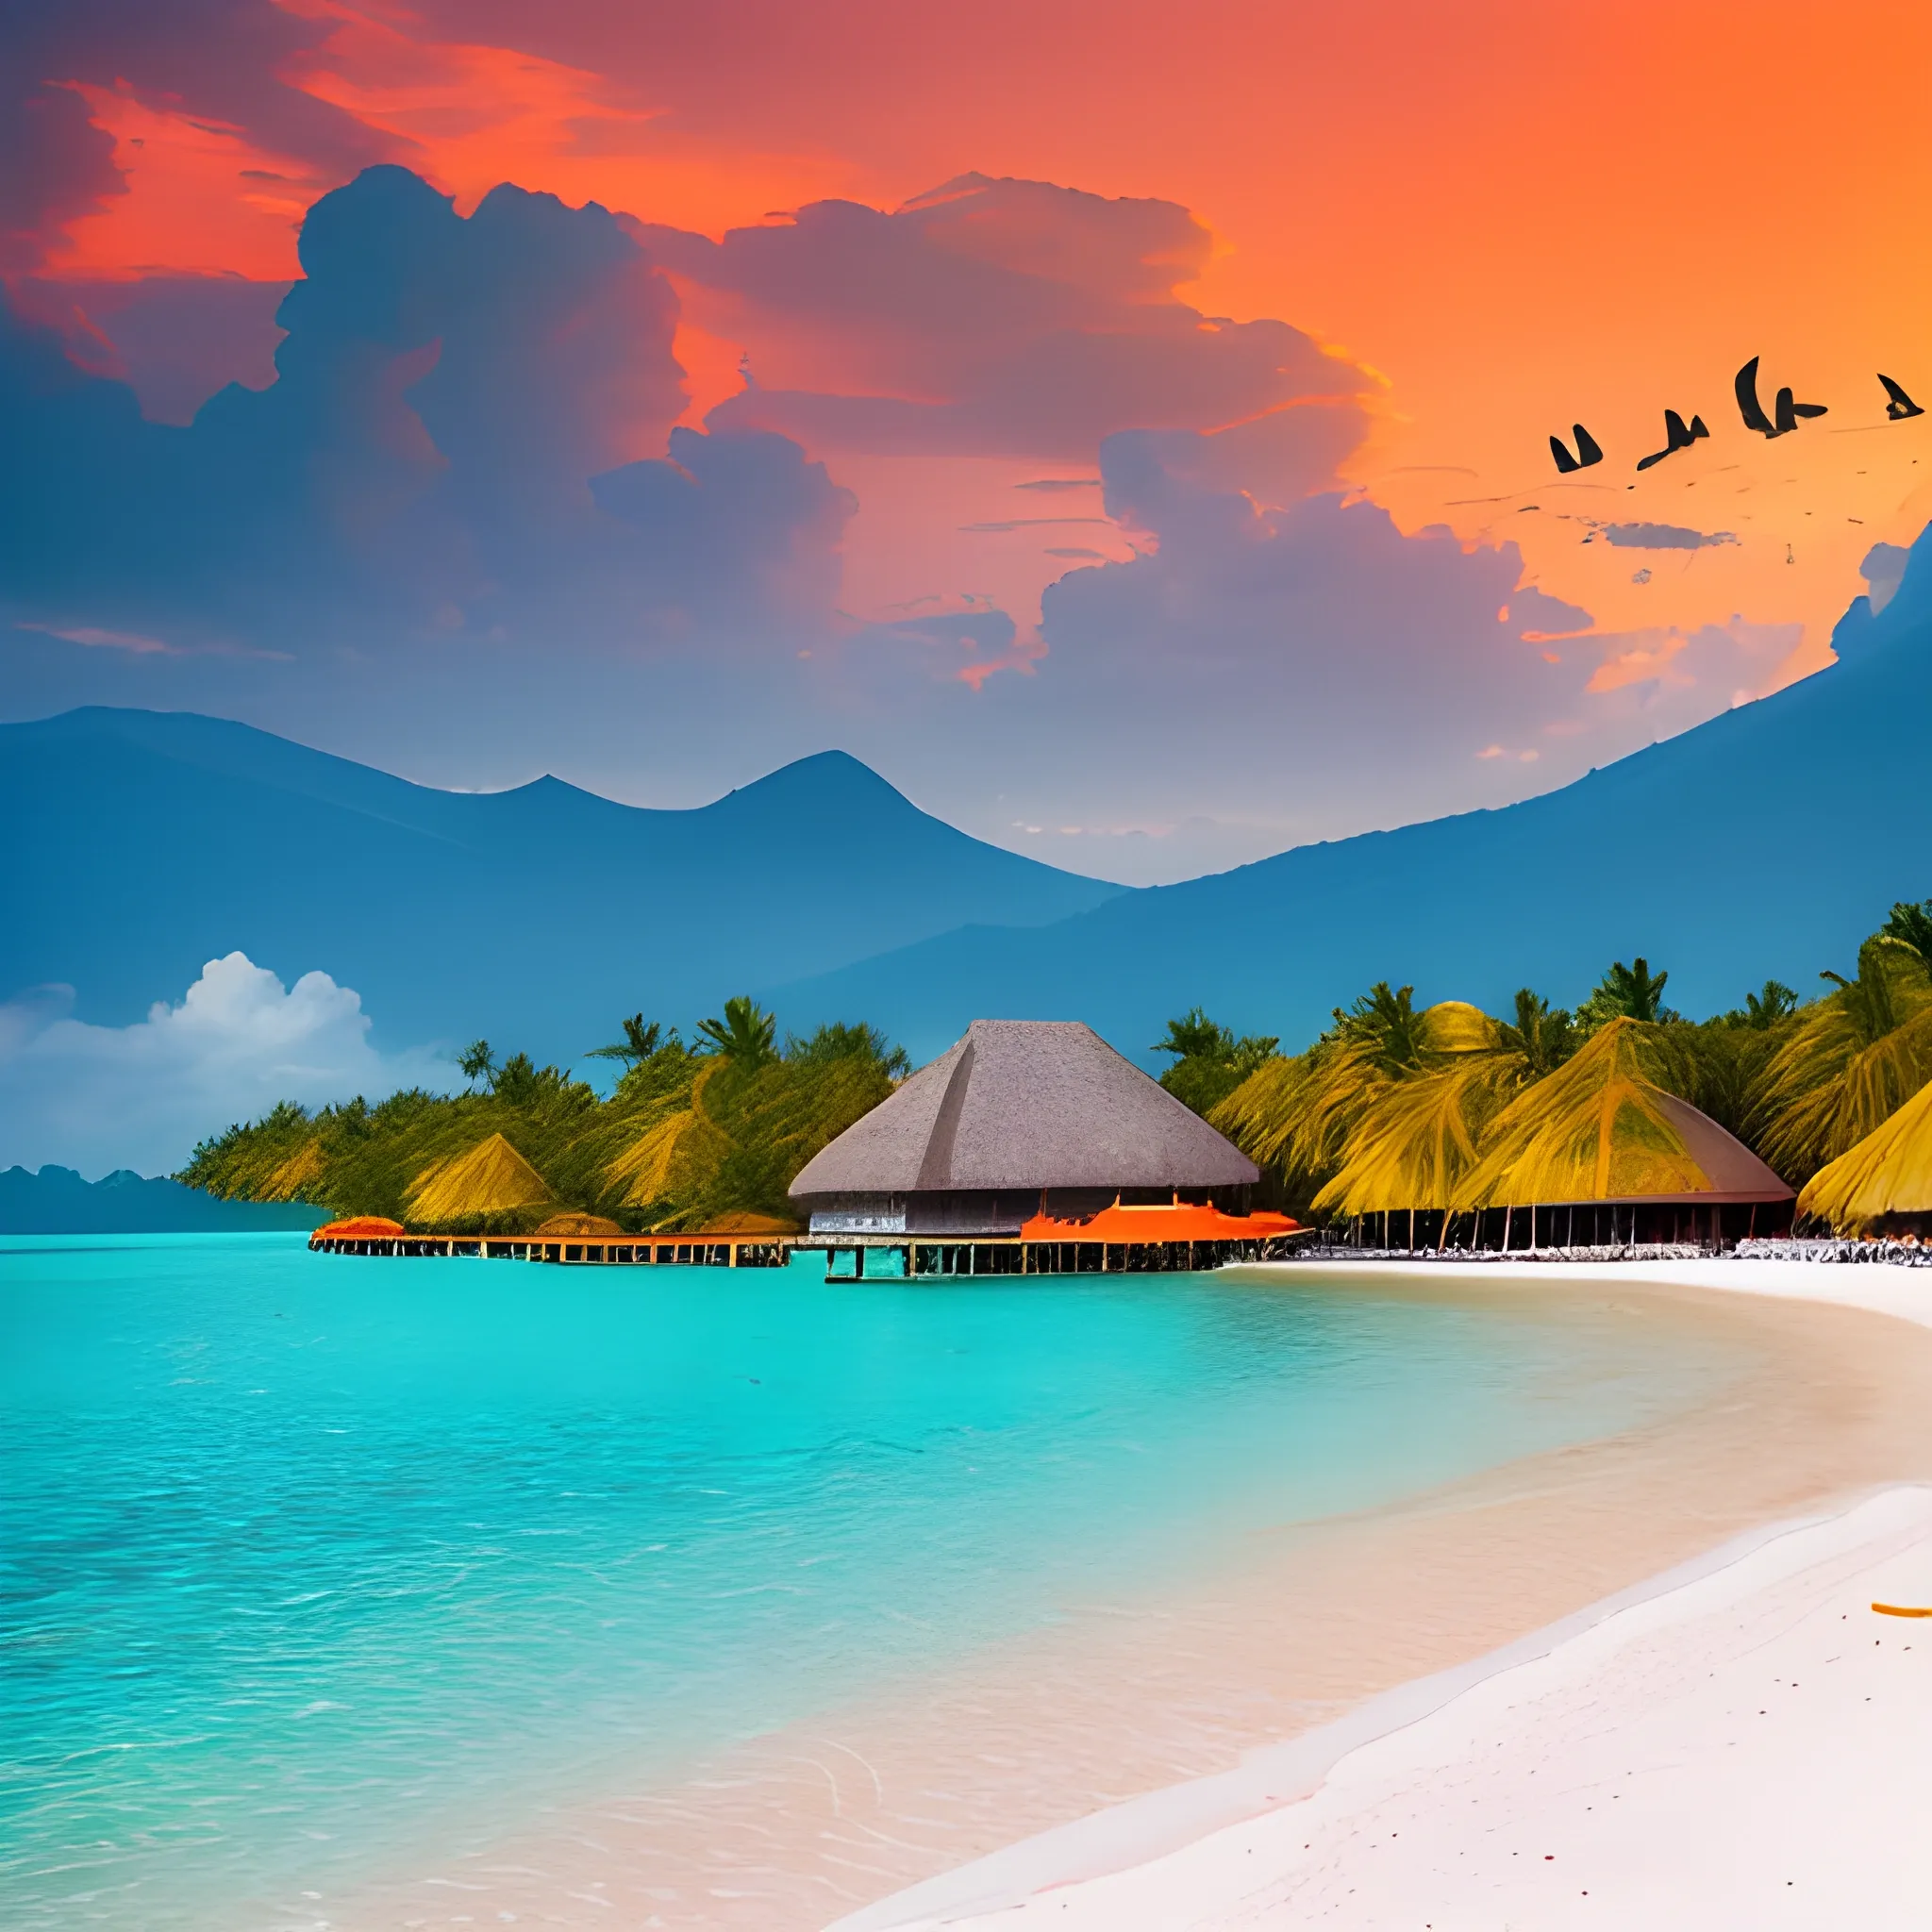 mountains, tourists, lake, beach, vacation, coconuts, plane, birds, tropics, burning yachts, Maldives, oranges, hotel 8k